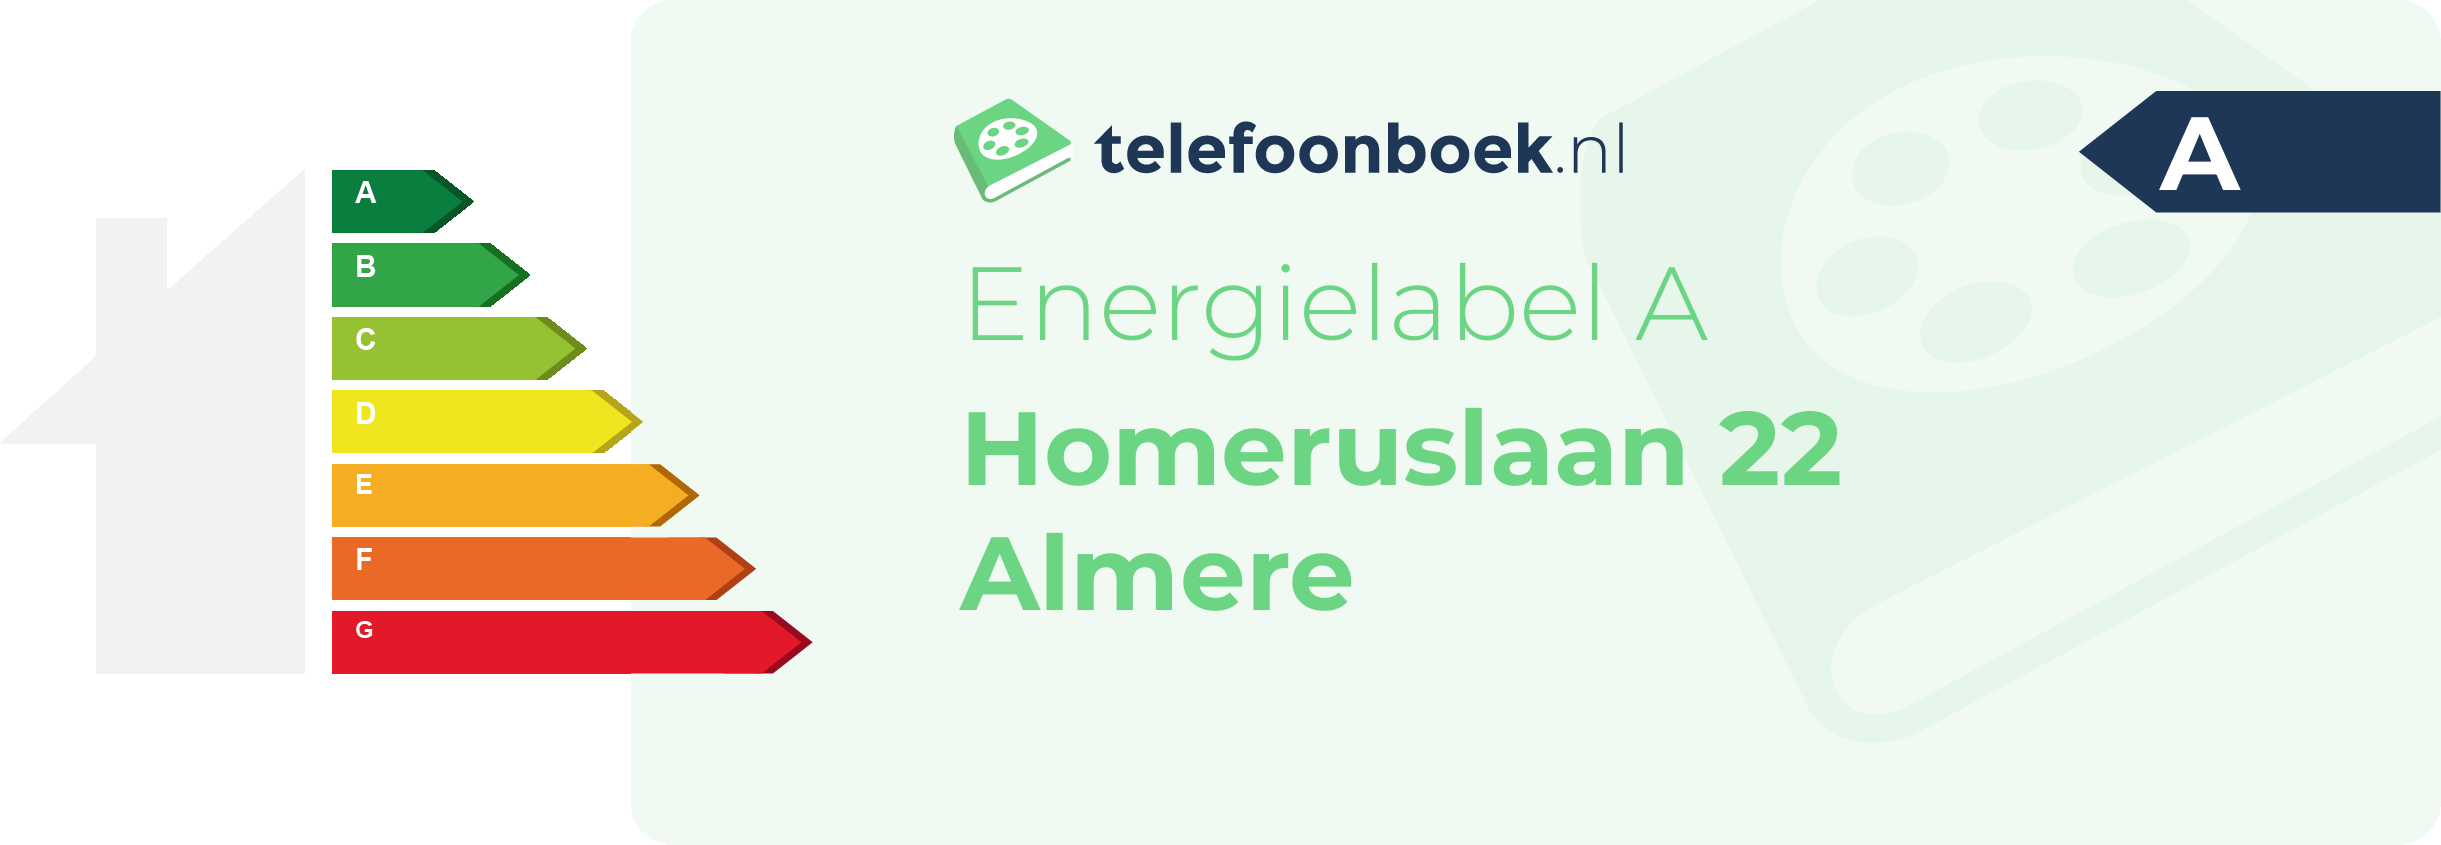 Energielabel Homeruslaan 22 Almere